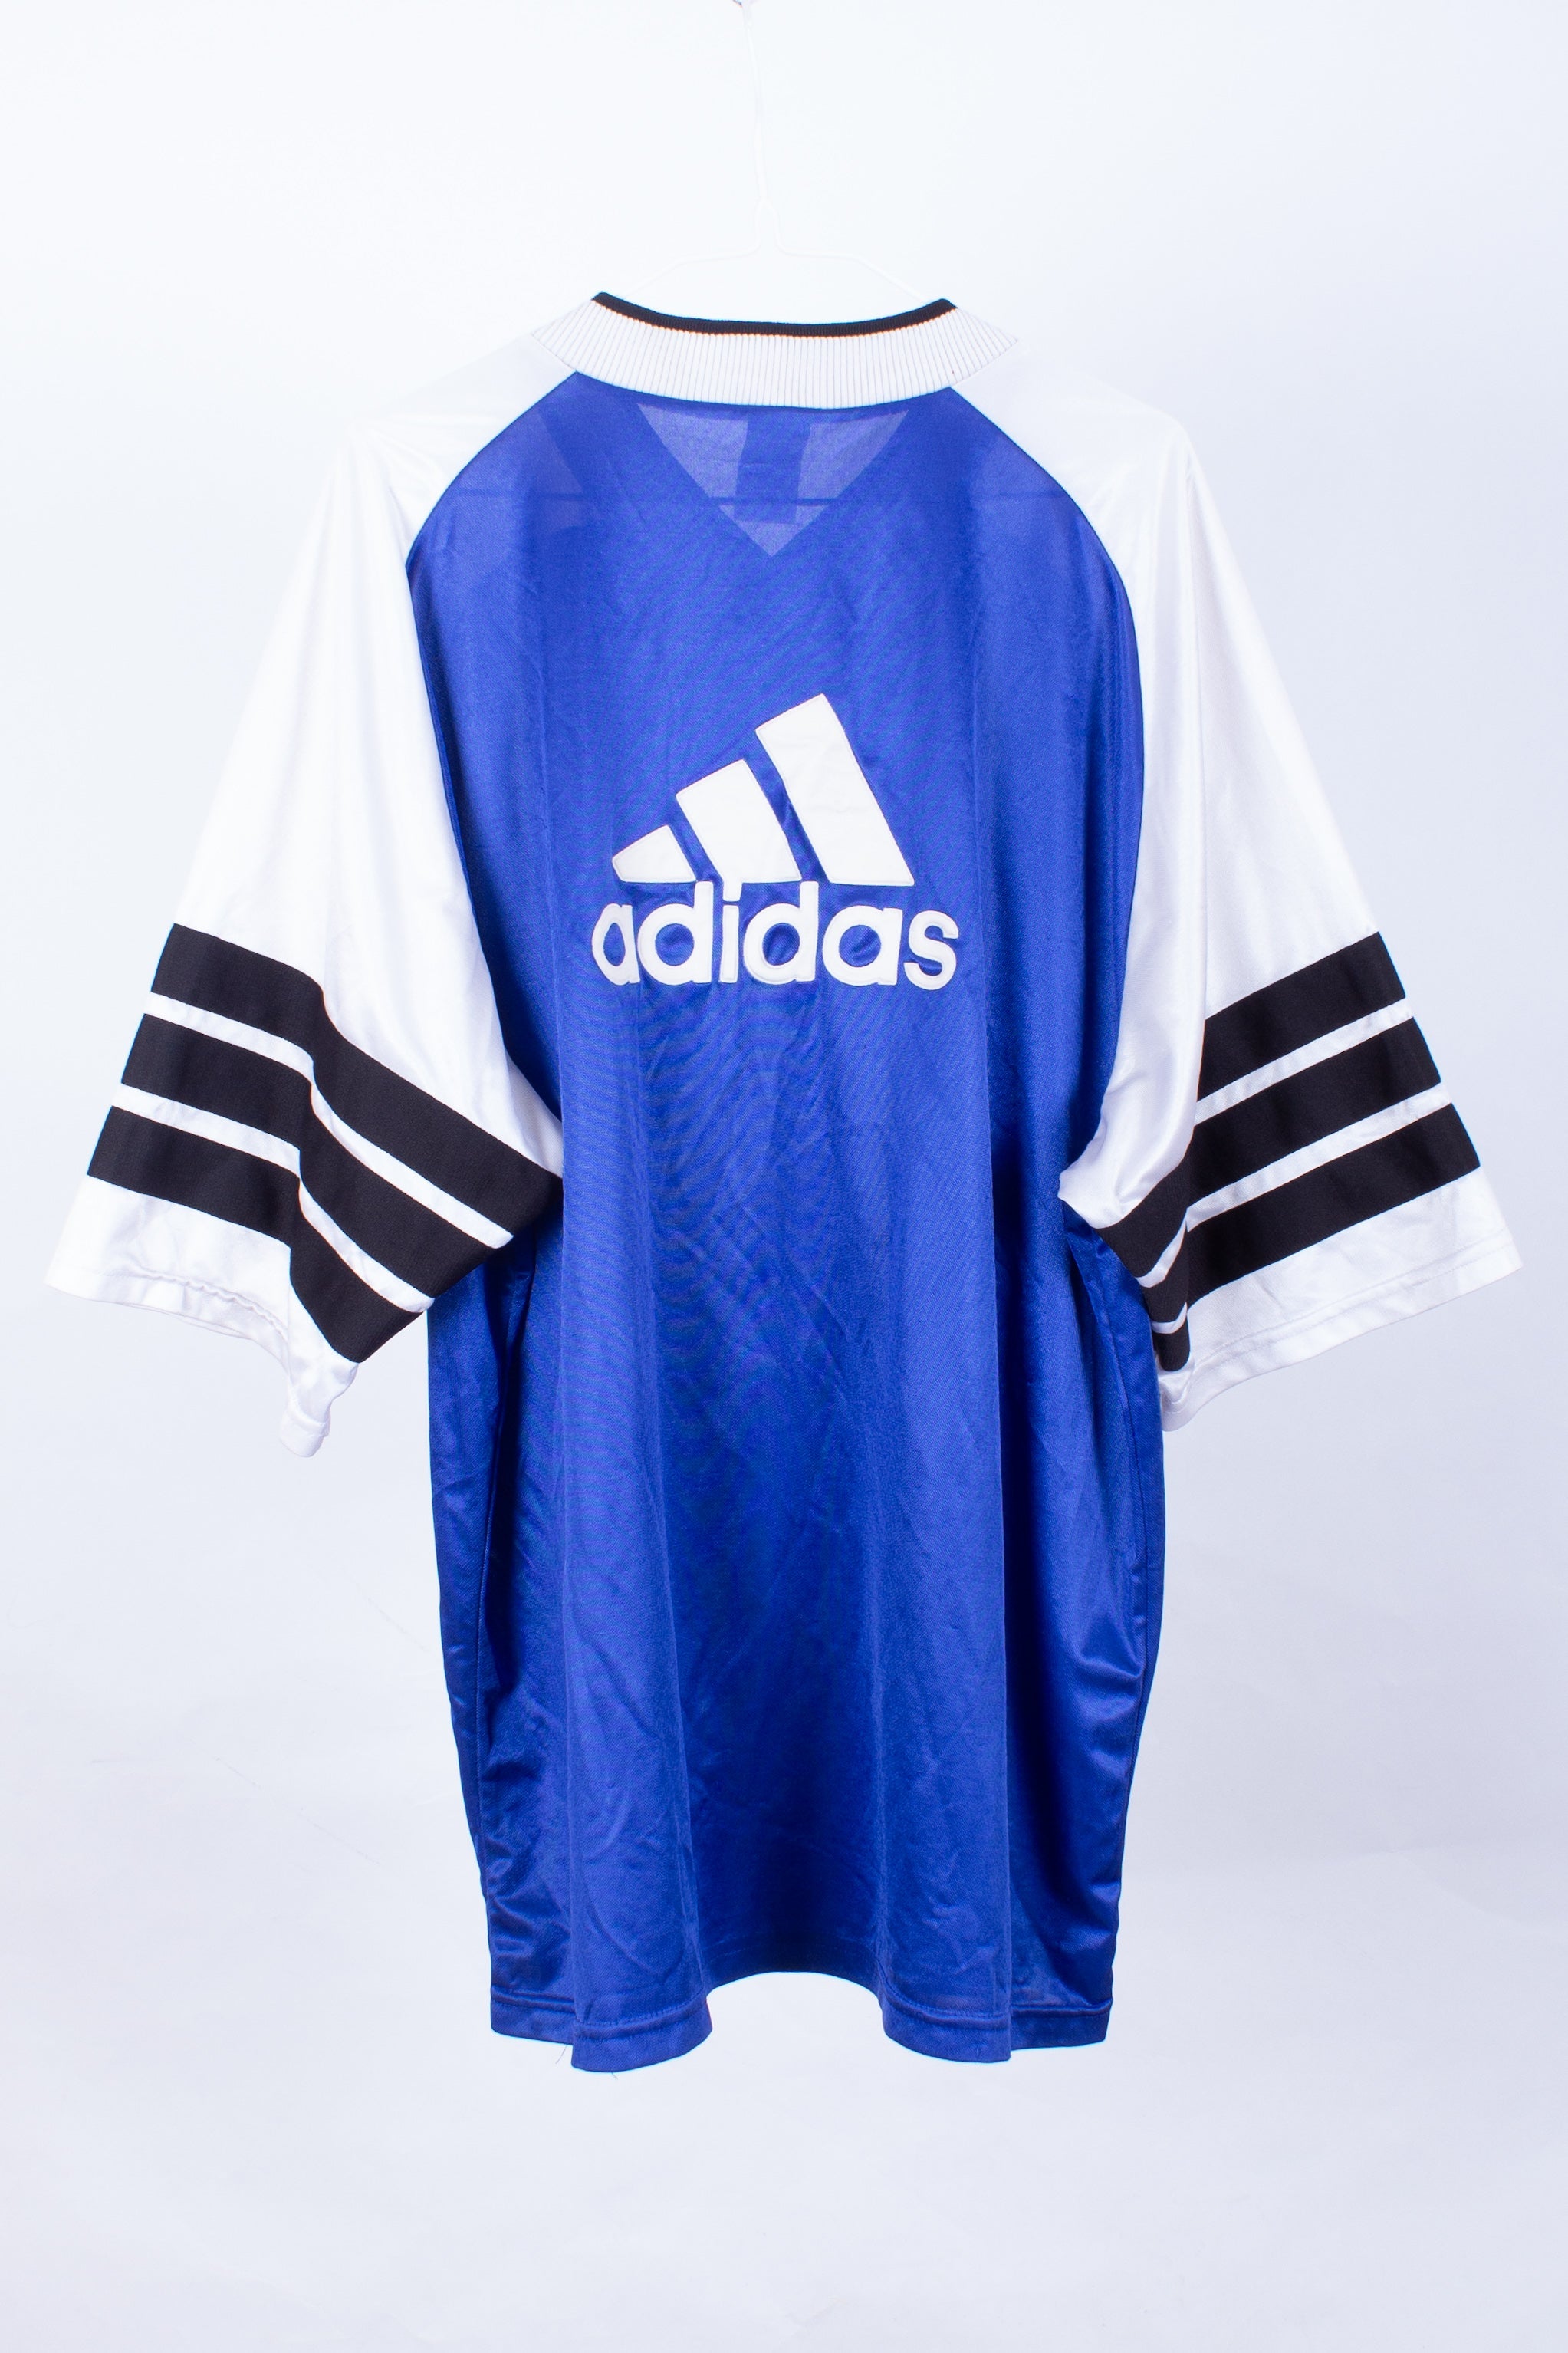 Schalke 04 1990's Training Shirt